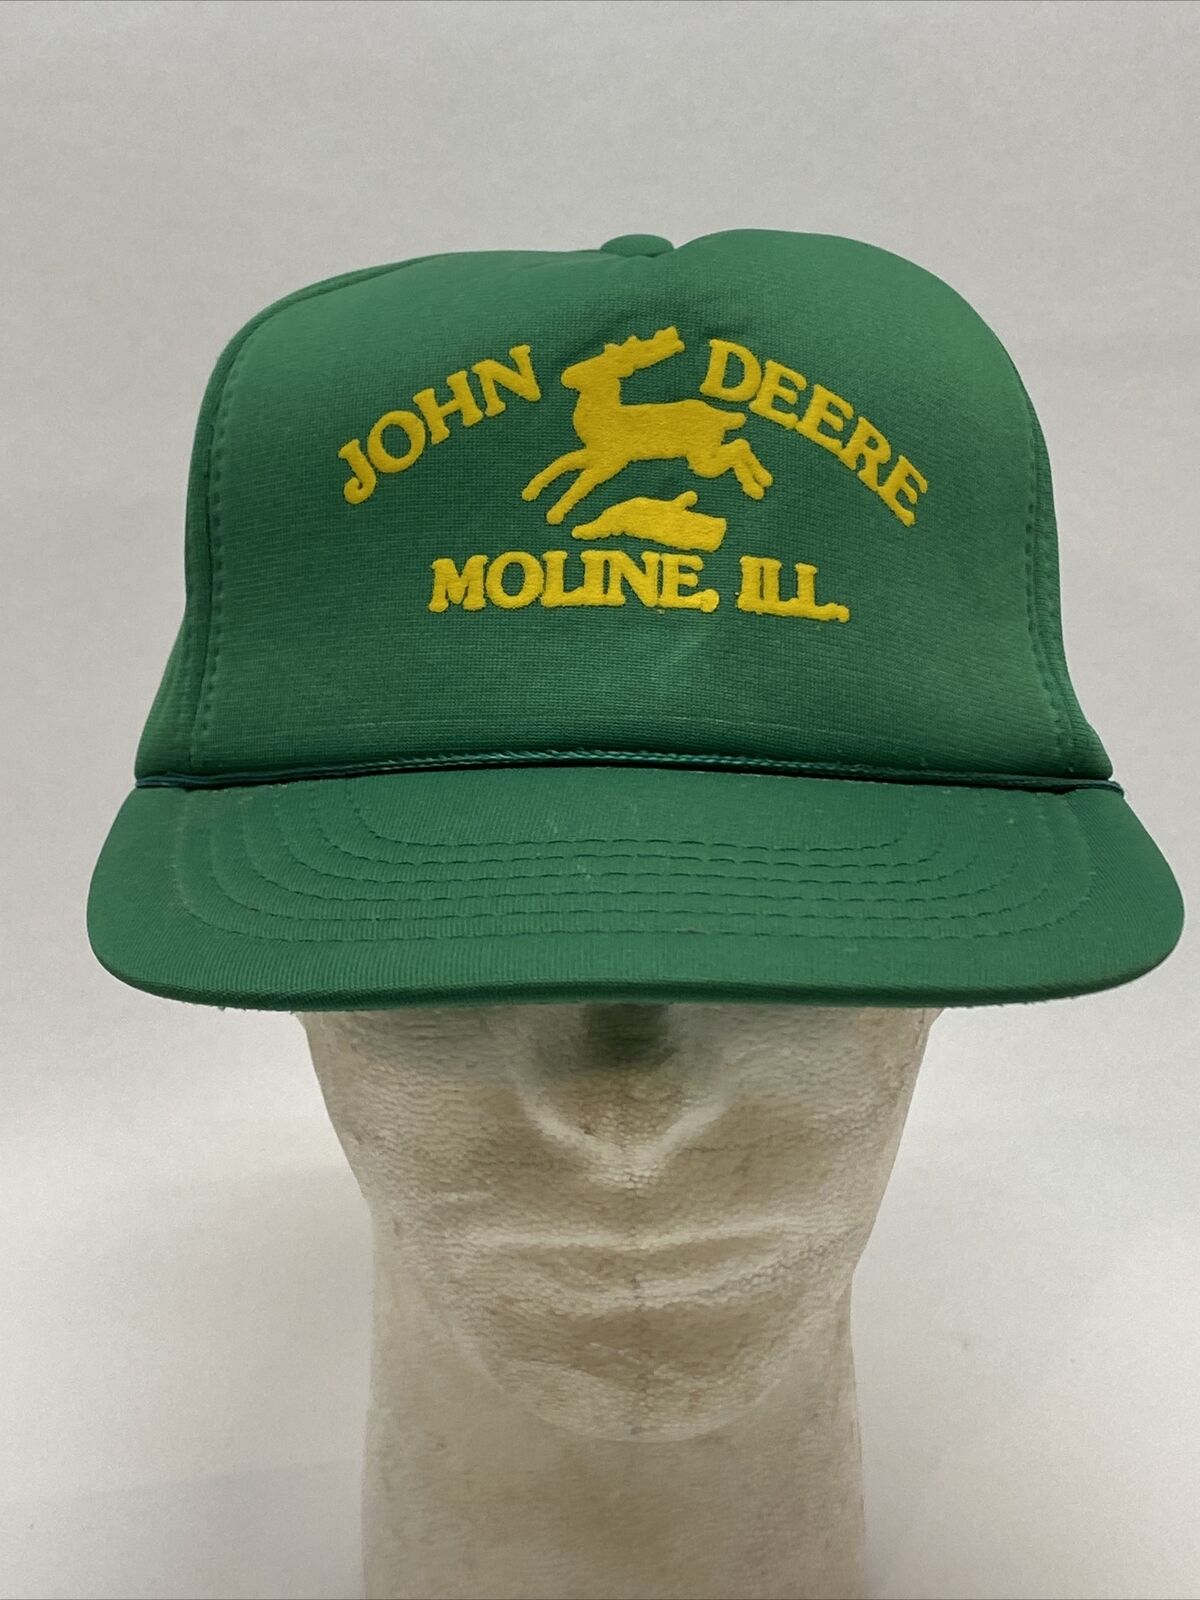 Vintage John Deere Pennant Winner By K-Products Moline, ill Trucket Hat One Size